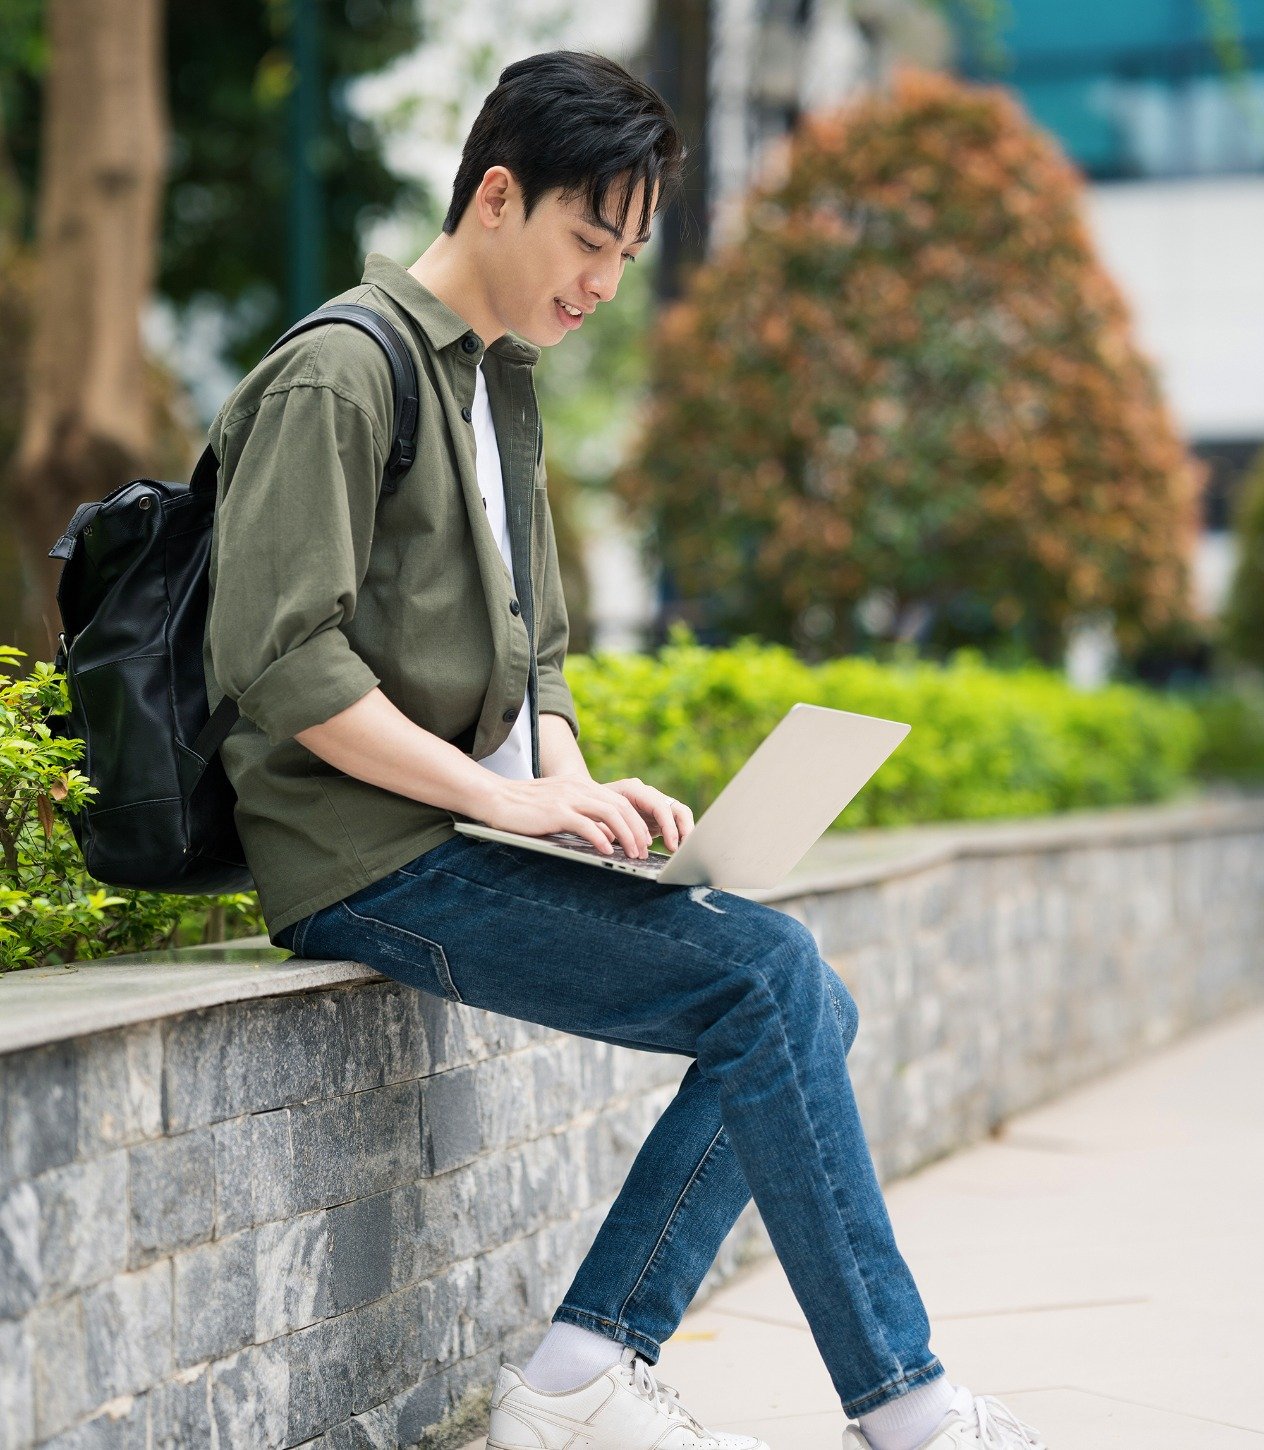 University student holding laptop